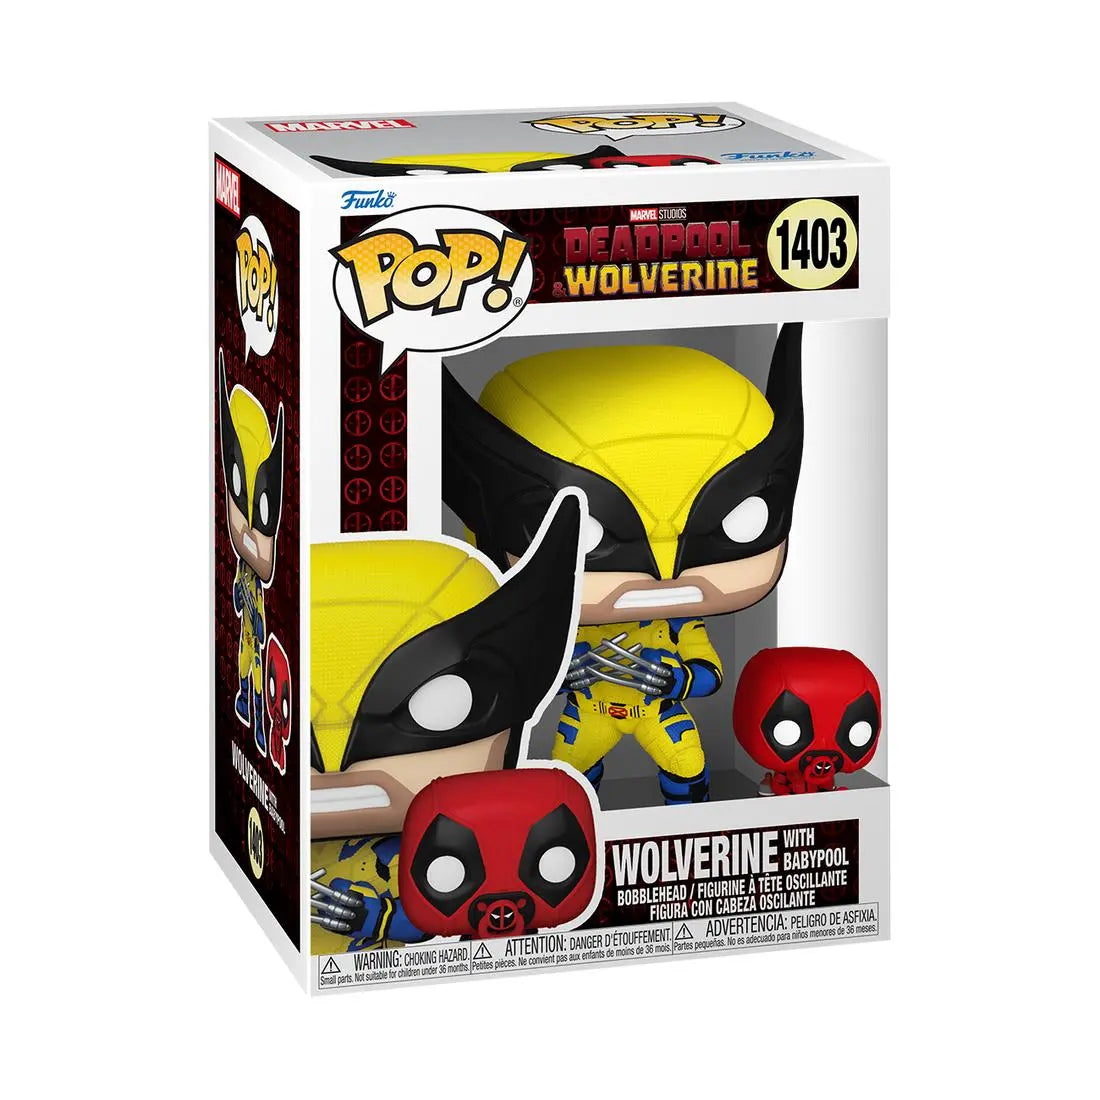 Funko Pop! Marvel Deadpool & Wolverine 1403 Wolverine with Babypool Funko